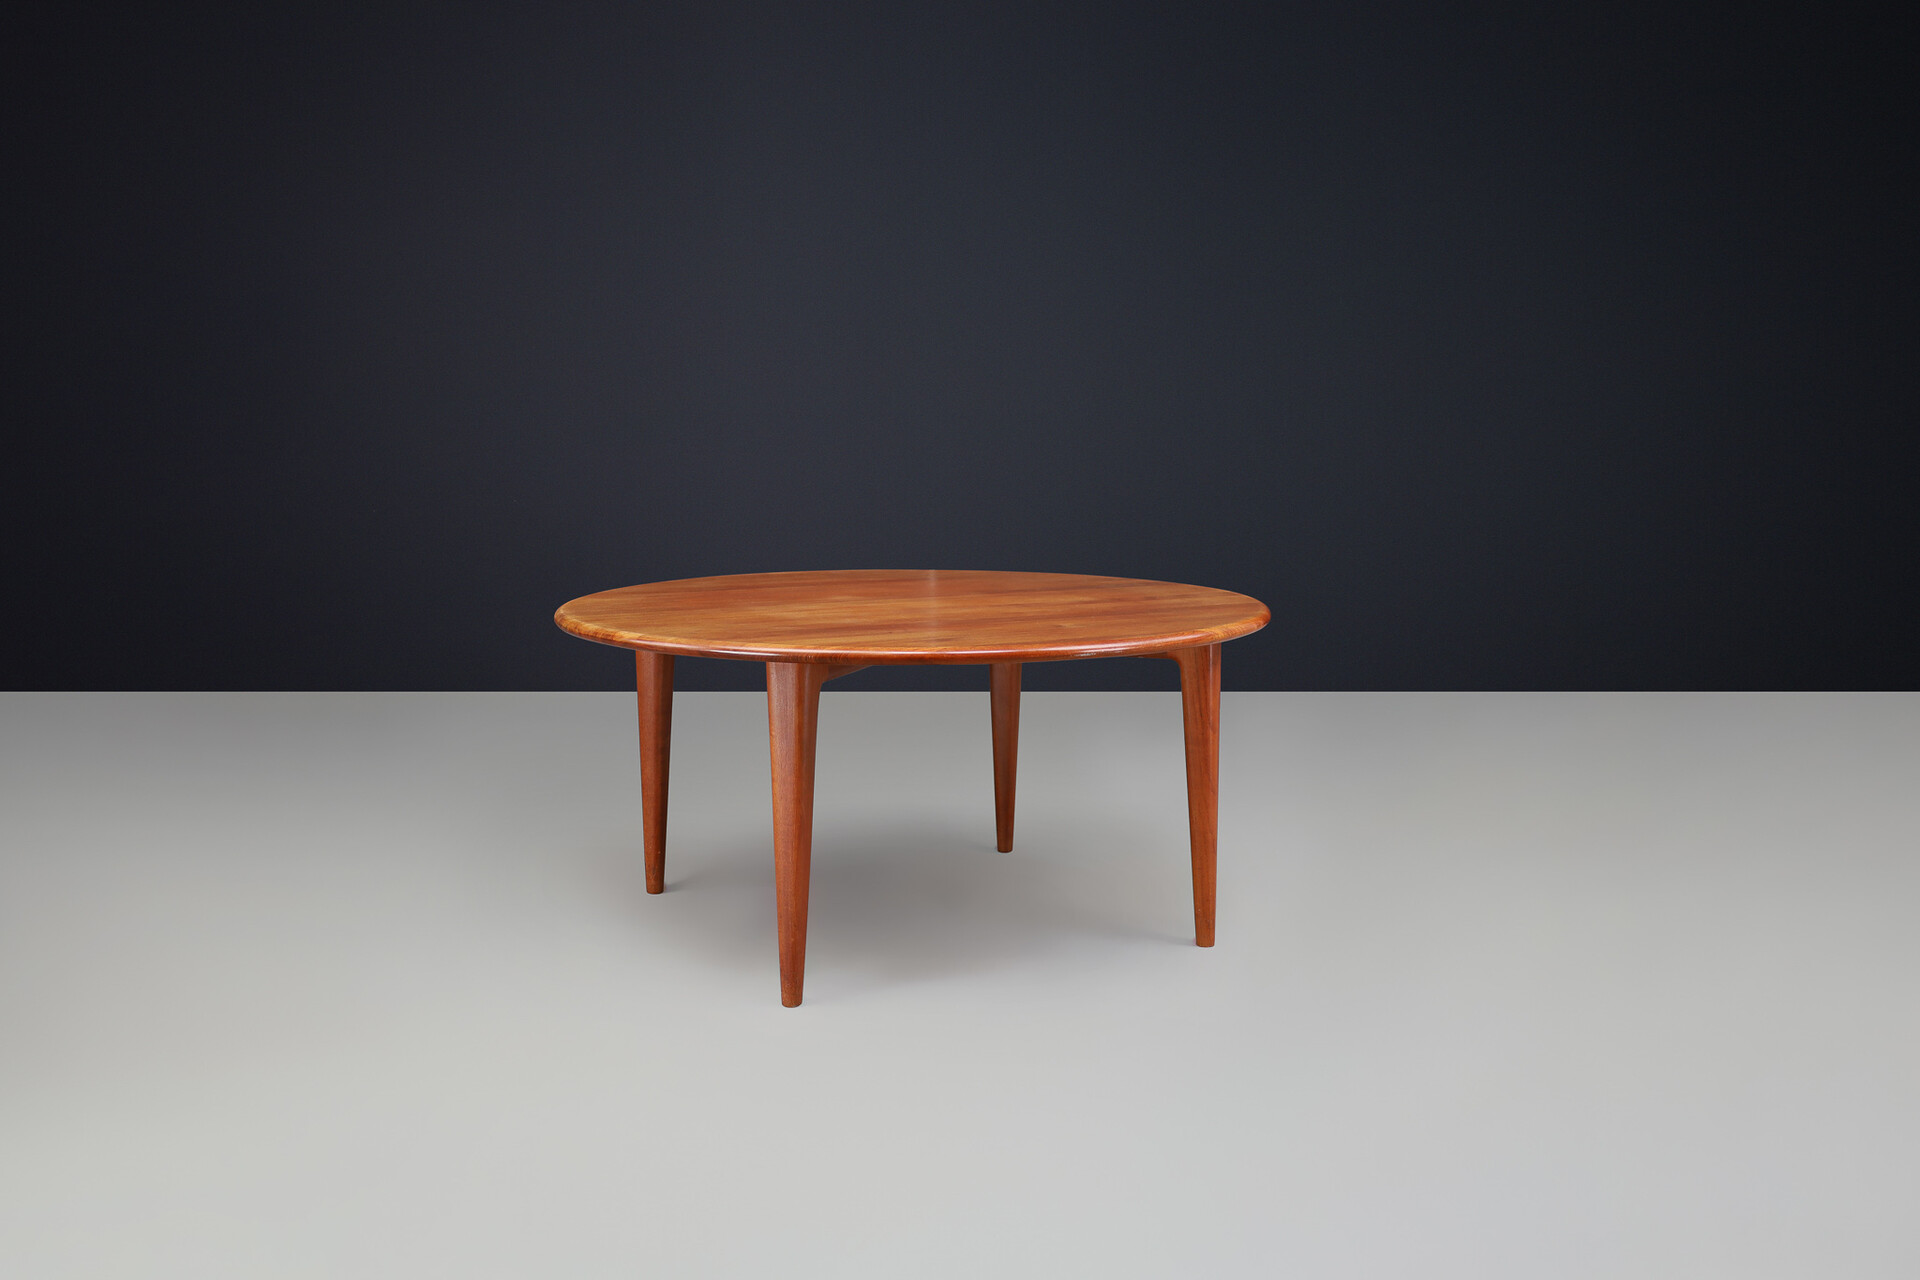 Scandinavian modern A. Mikael Laursen Round Solid Teak Dining Table, Denmark 1960 Mid-20th century